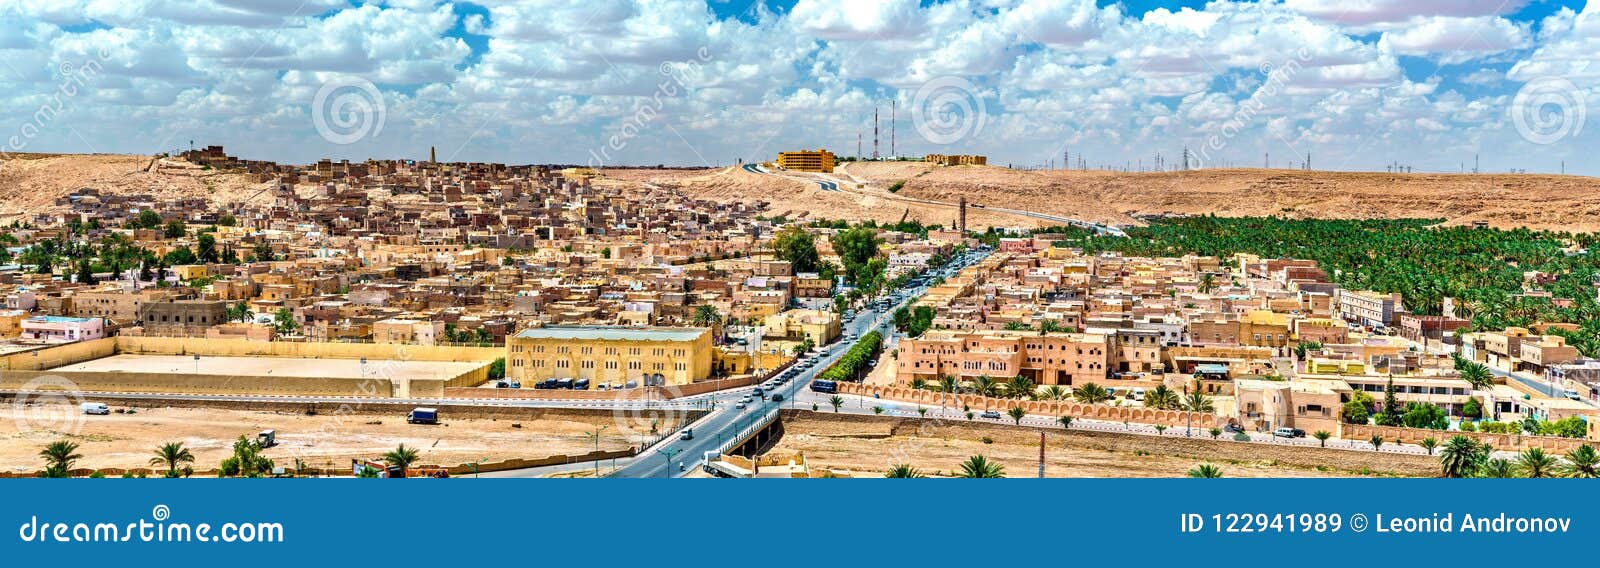 ksar bounoura, an old town in the m`zab valley in algeria